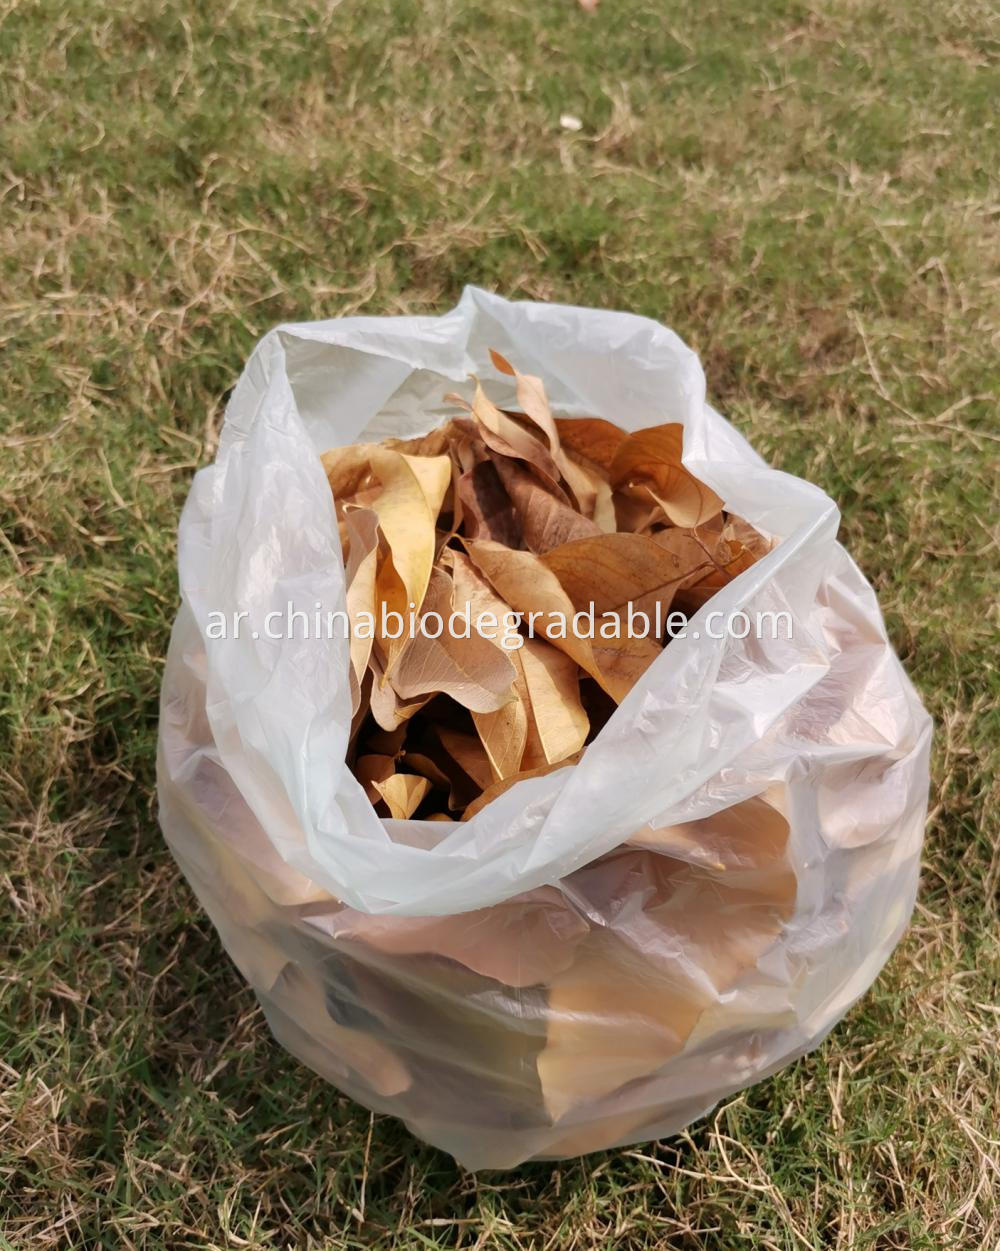 EN13432/BPI Certified Biodegradable Food Bin Bags